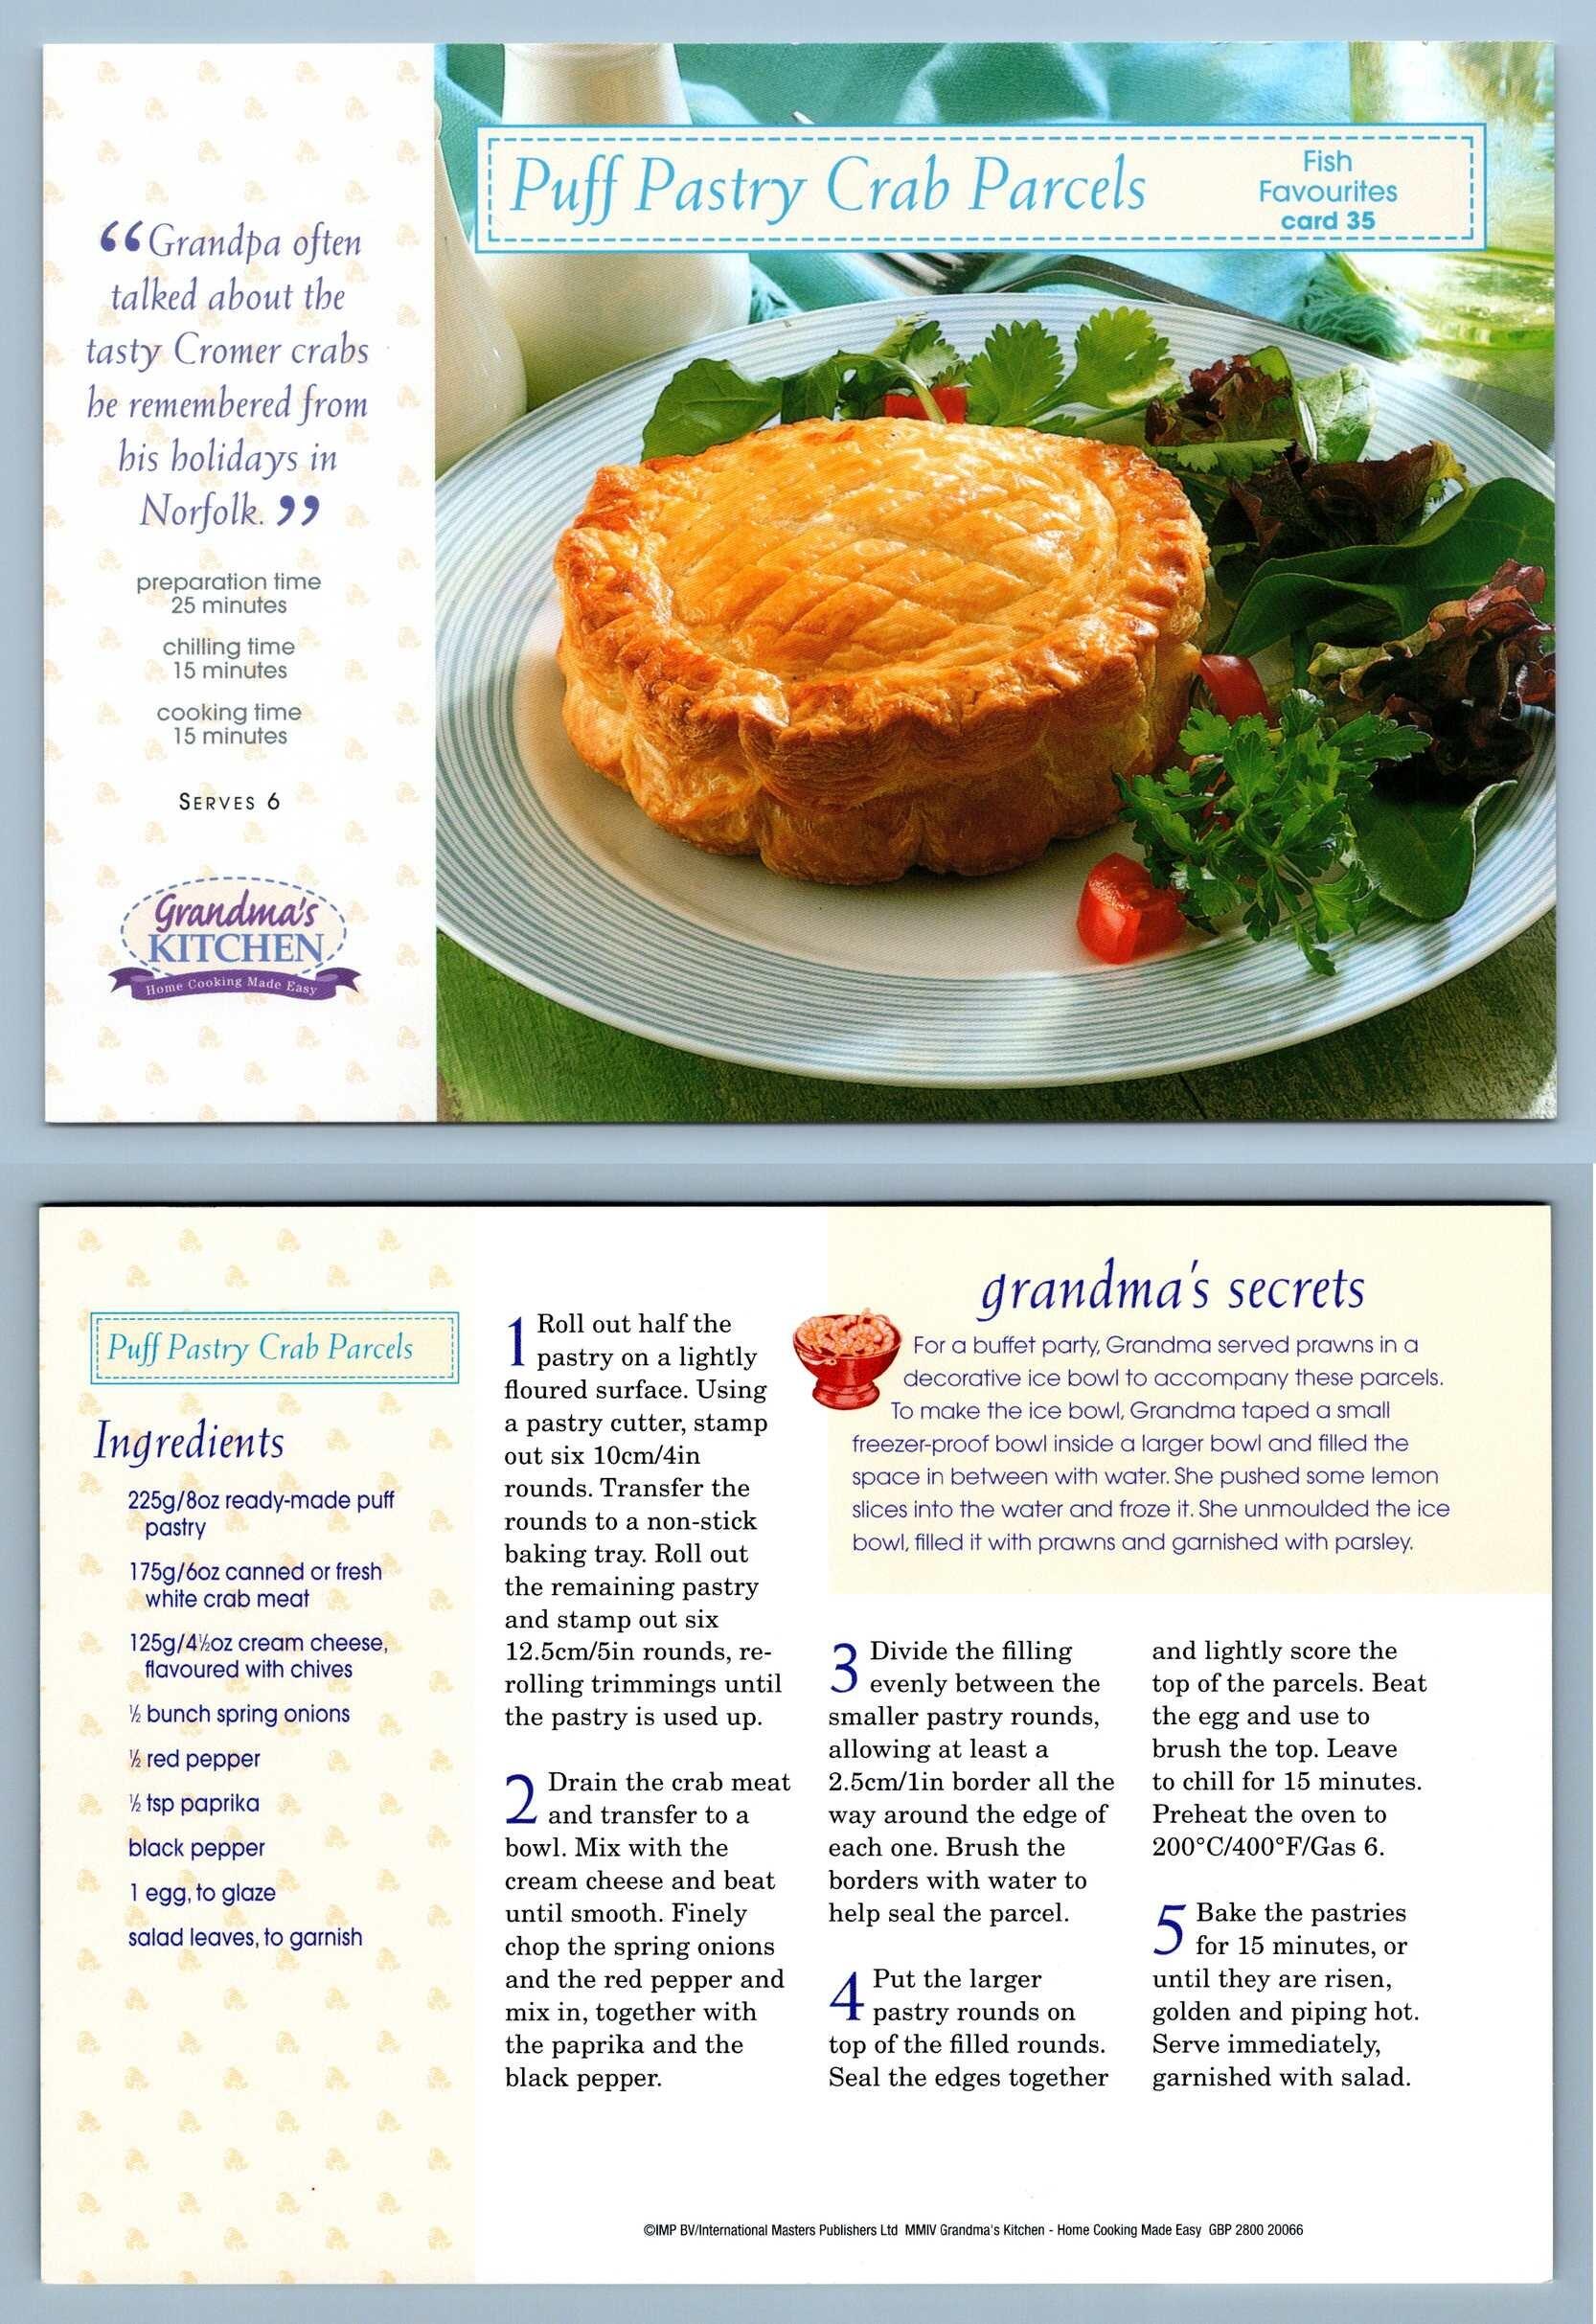 Puff Pastry Crab Parcels #35 Fish - Grandma's Kitchen Recipe Card